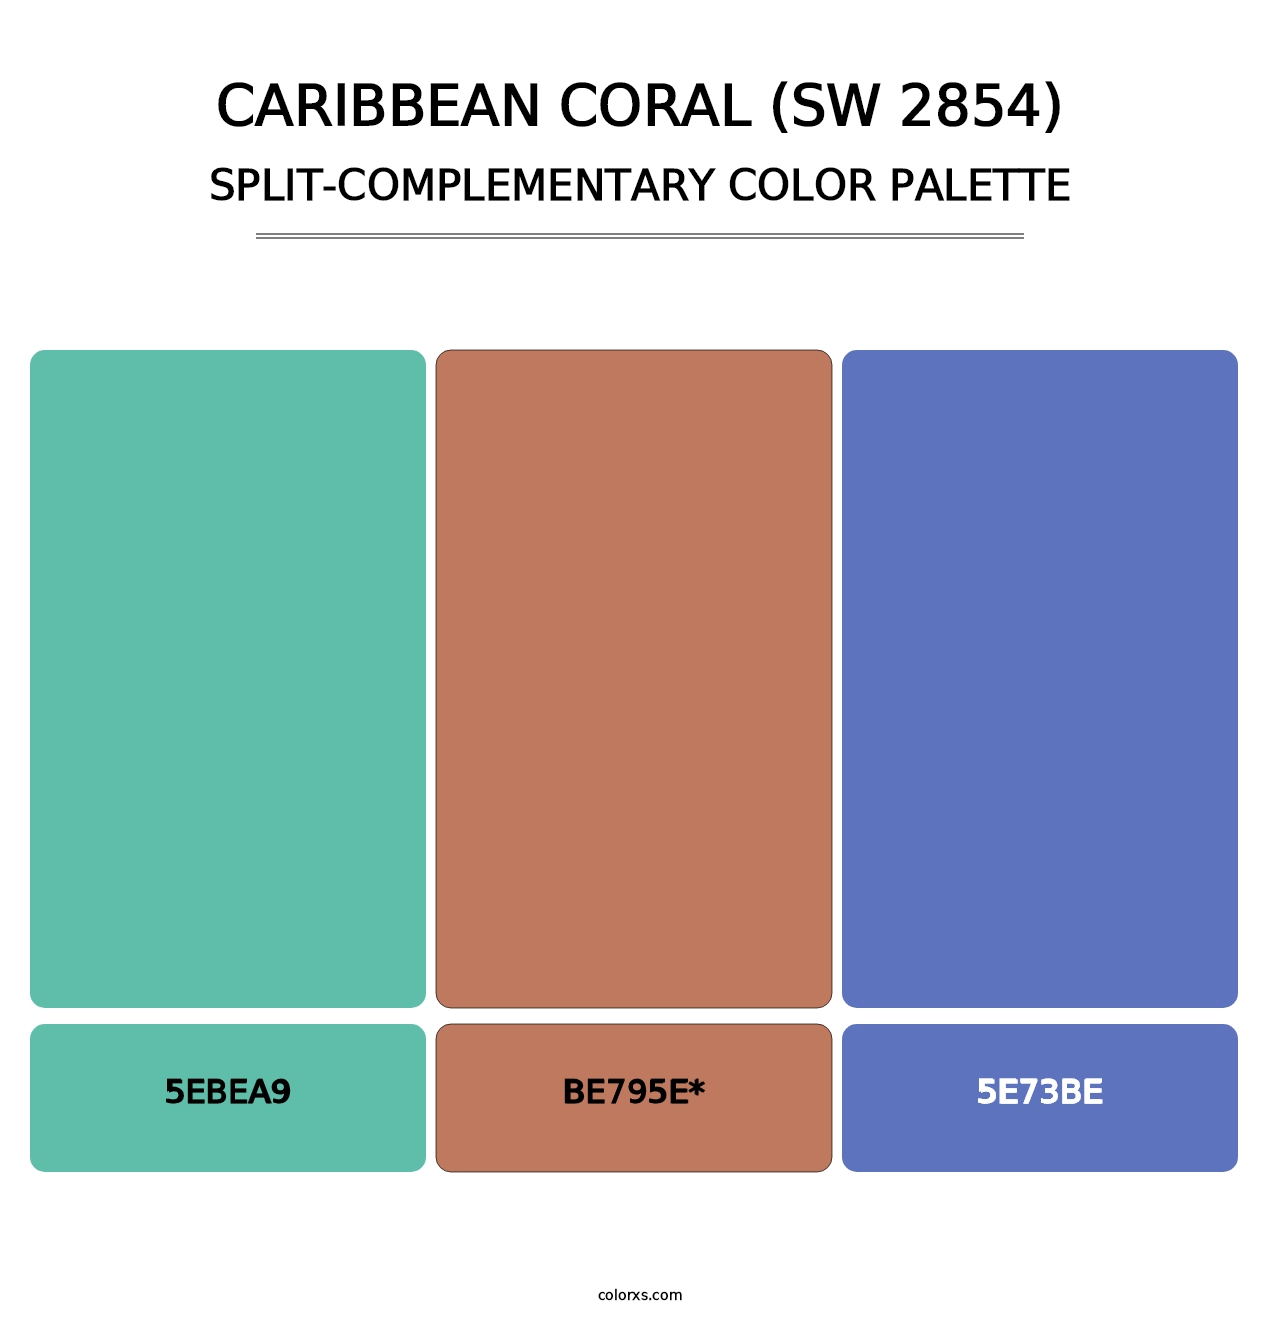 Caribbean Coral (SW 2854) - Split-Complementary Color Palette